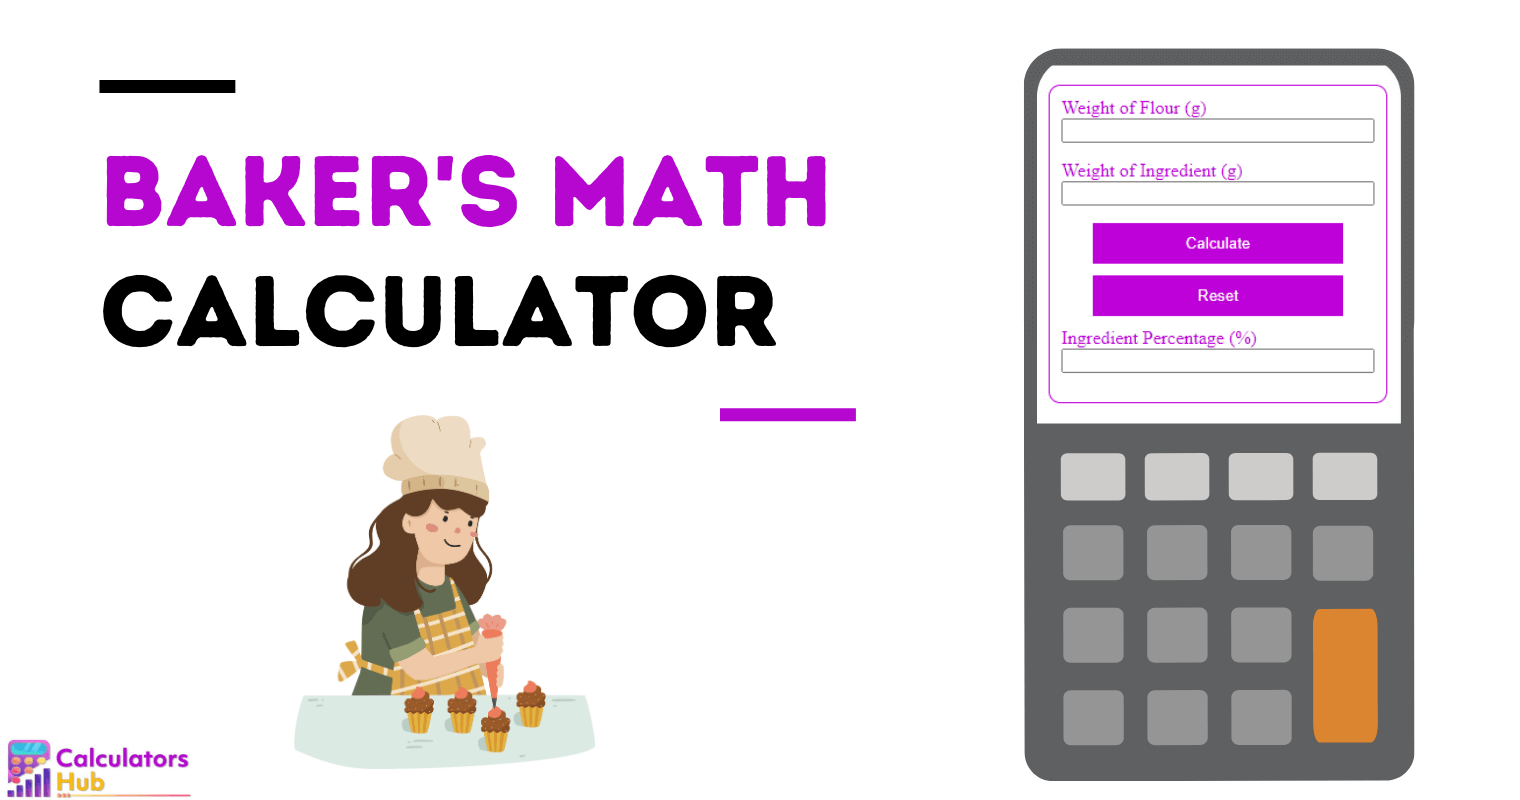 Baker's Math Calculator